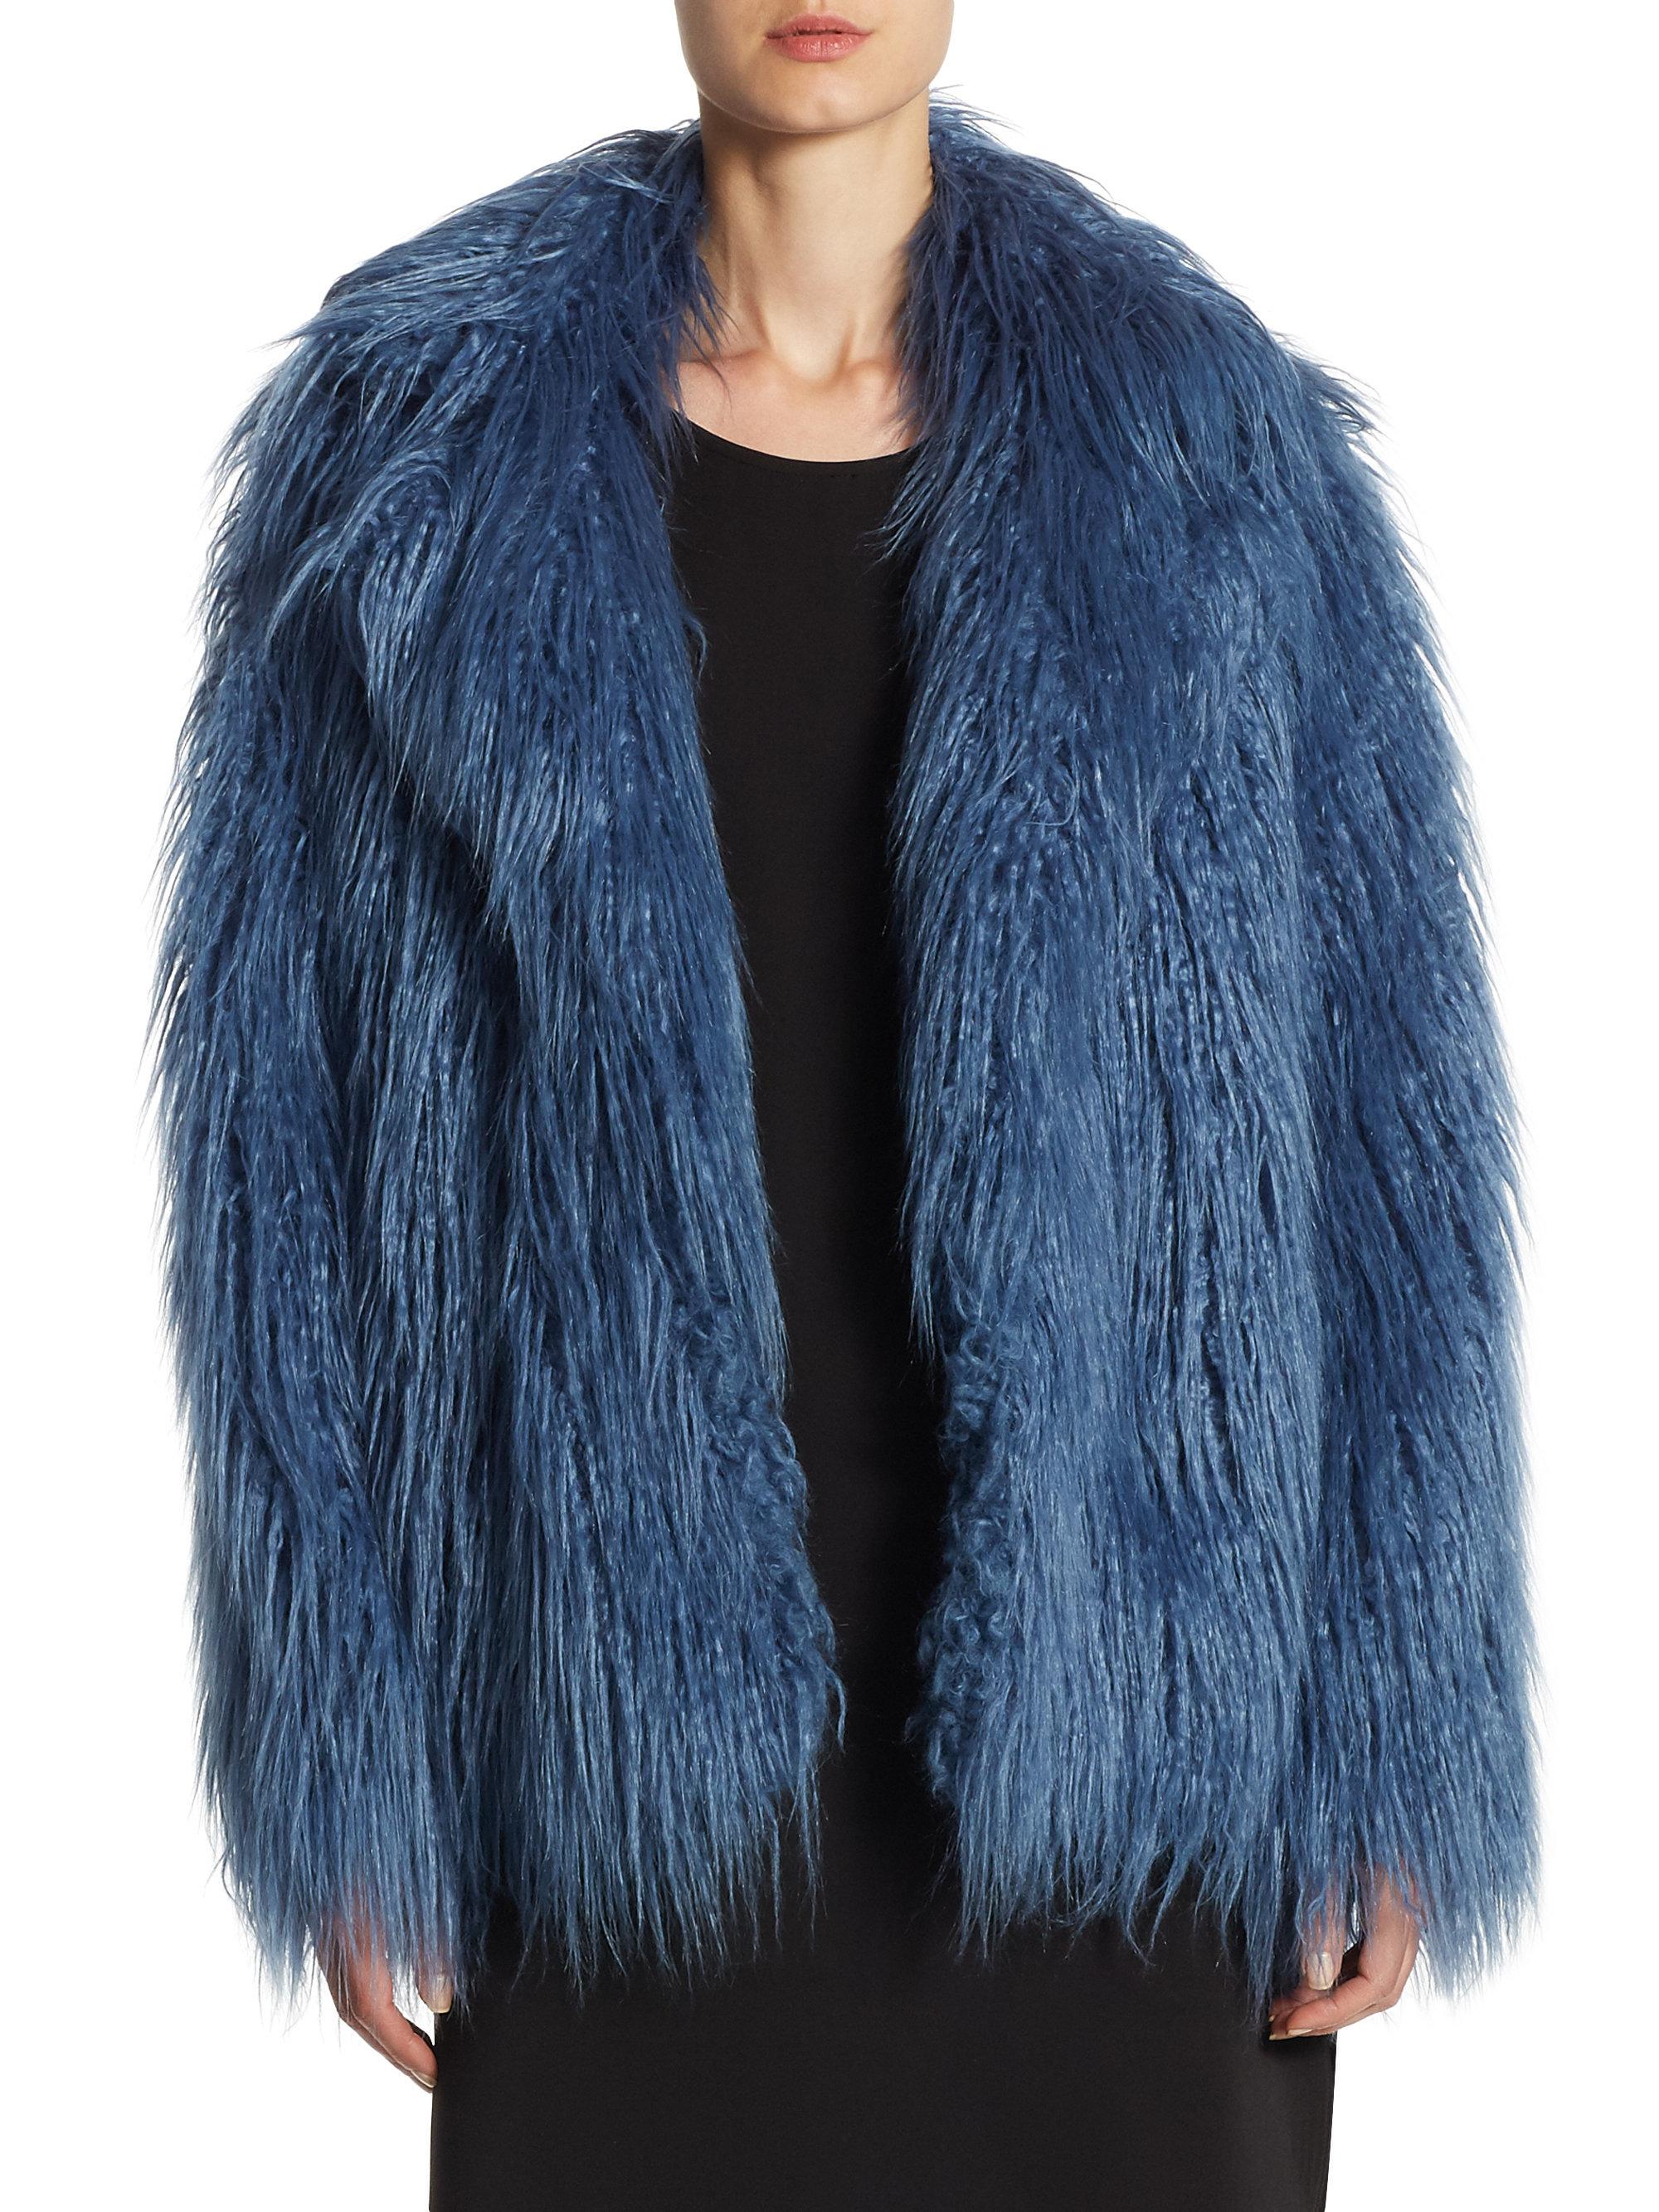 Lyst - Halston Heritage Faux Fur Coat in Blue